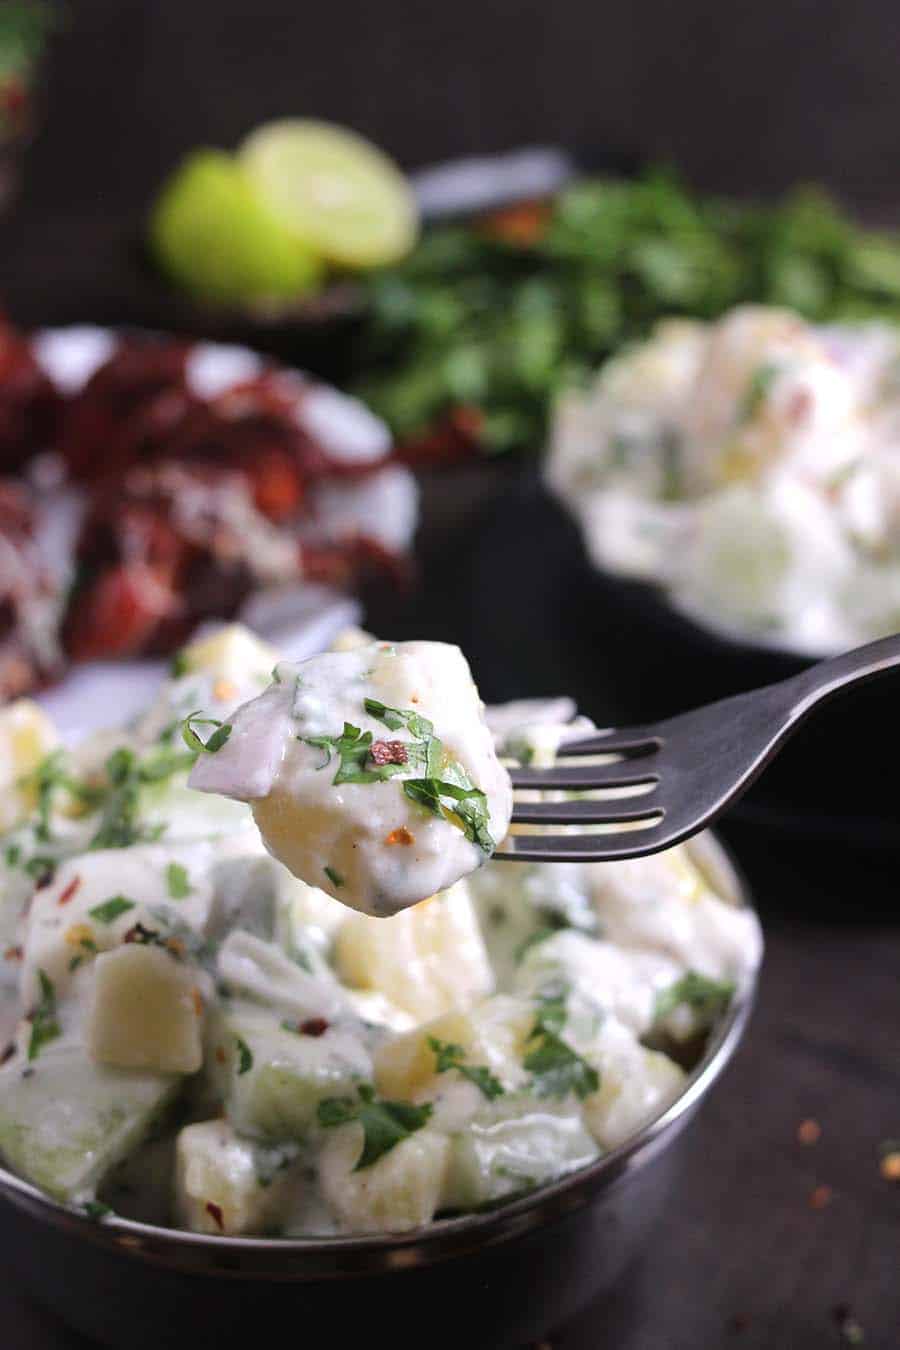 grandma's potato salad, American potato salad, German potato salad, creamy potato recipes for dinner